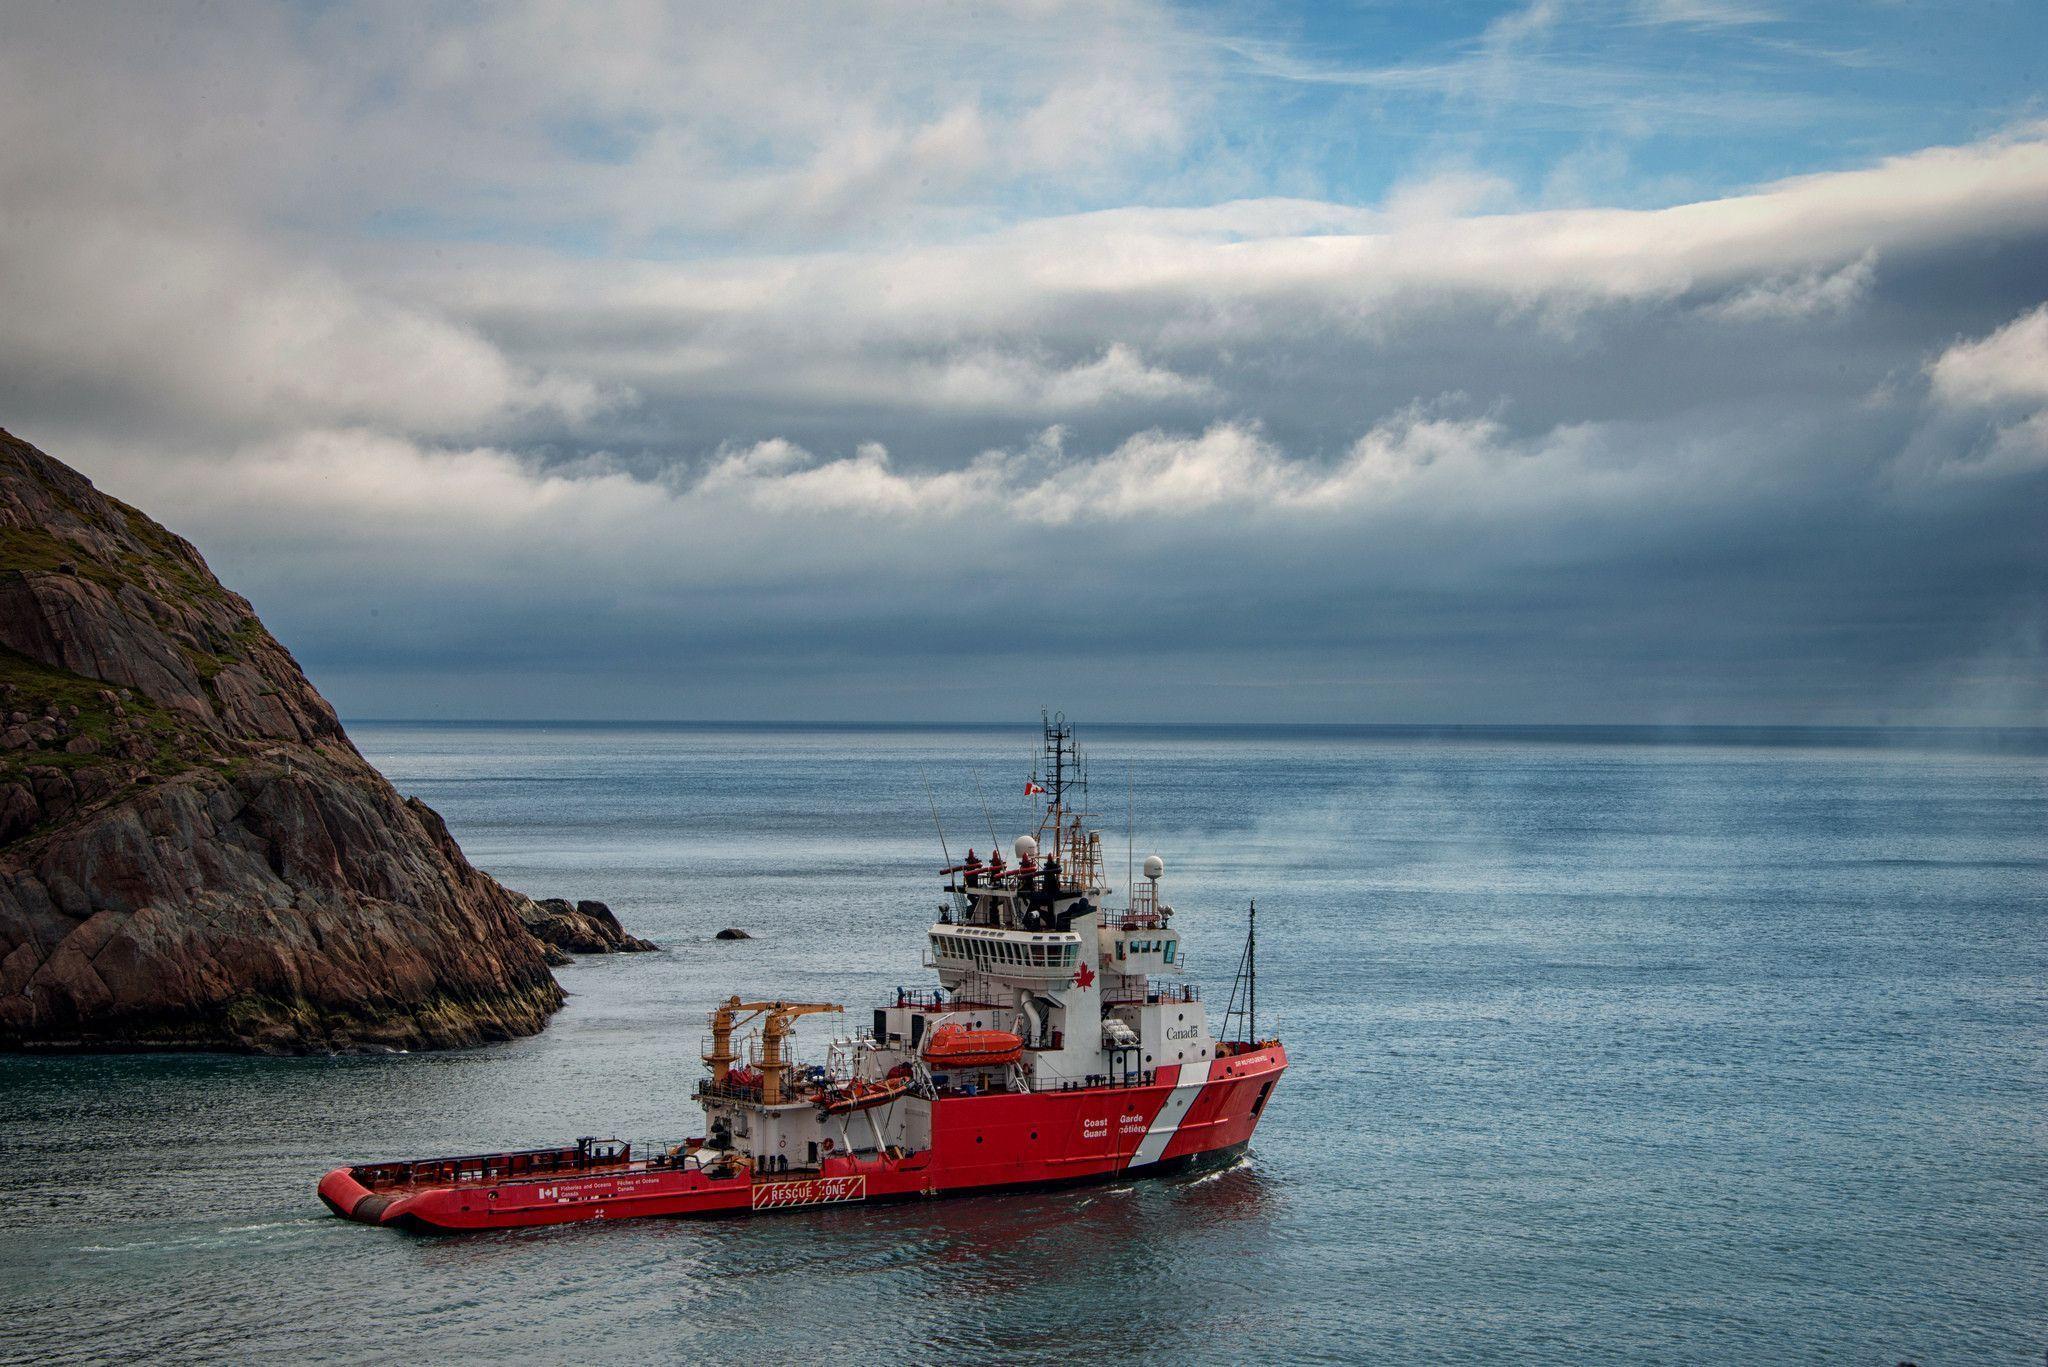 Download wallpapers coast guard, St. John&Newfoundland, Canada